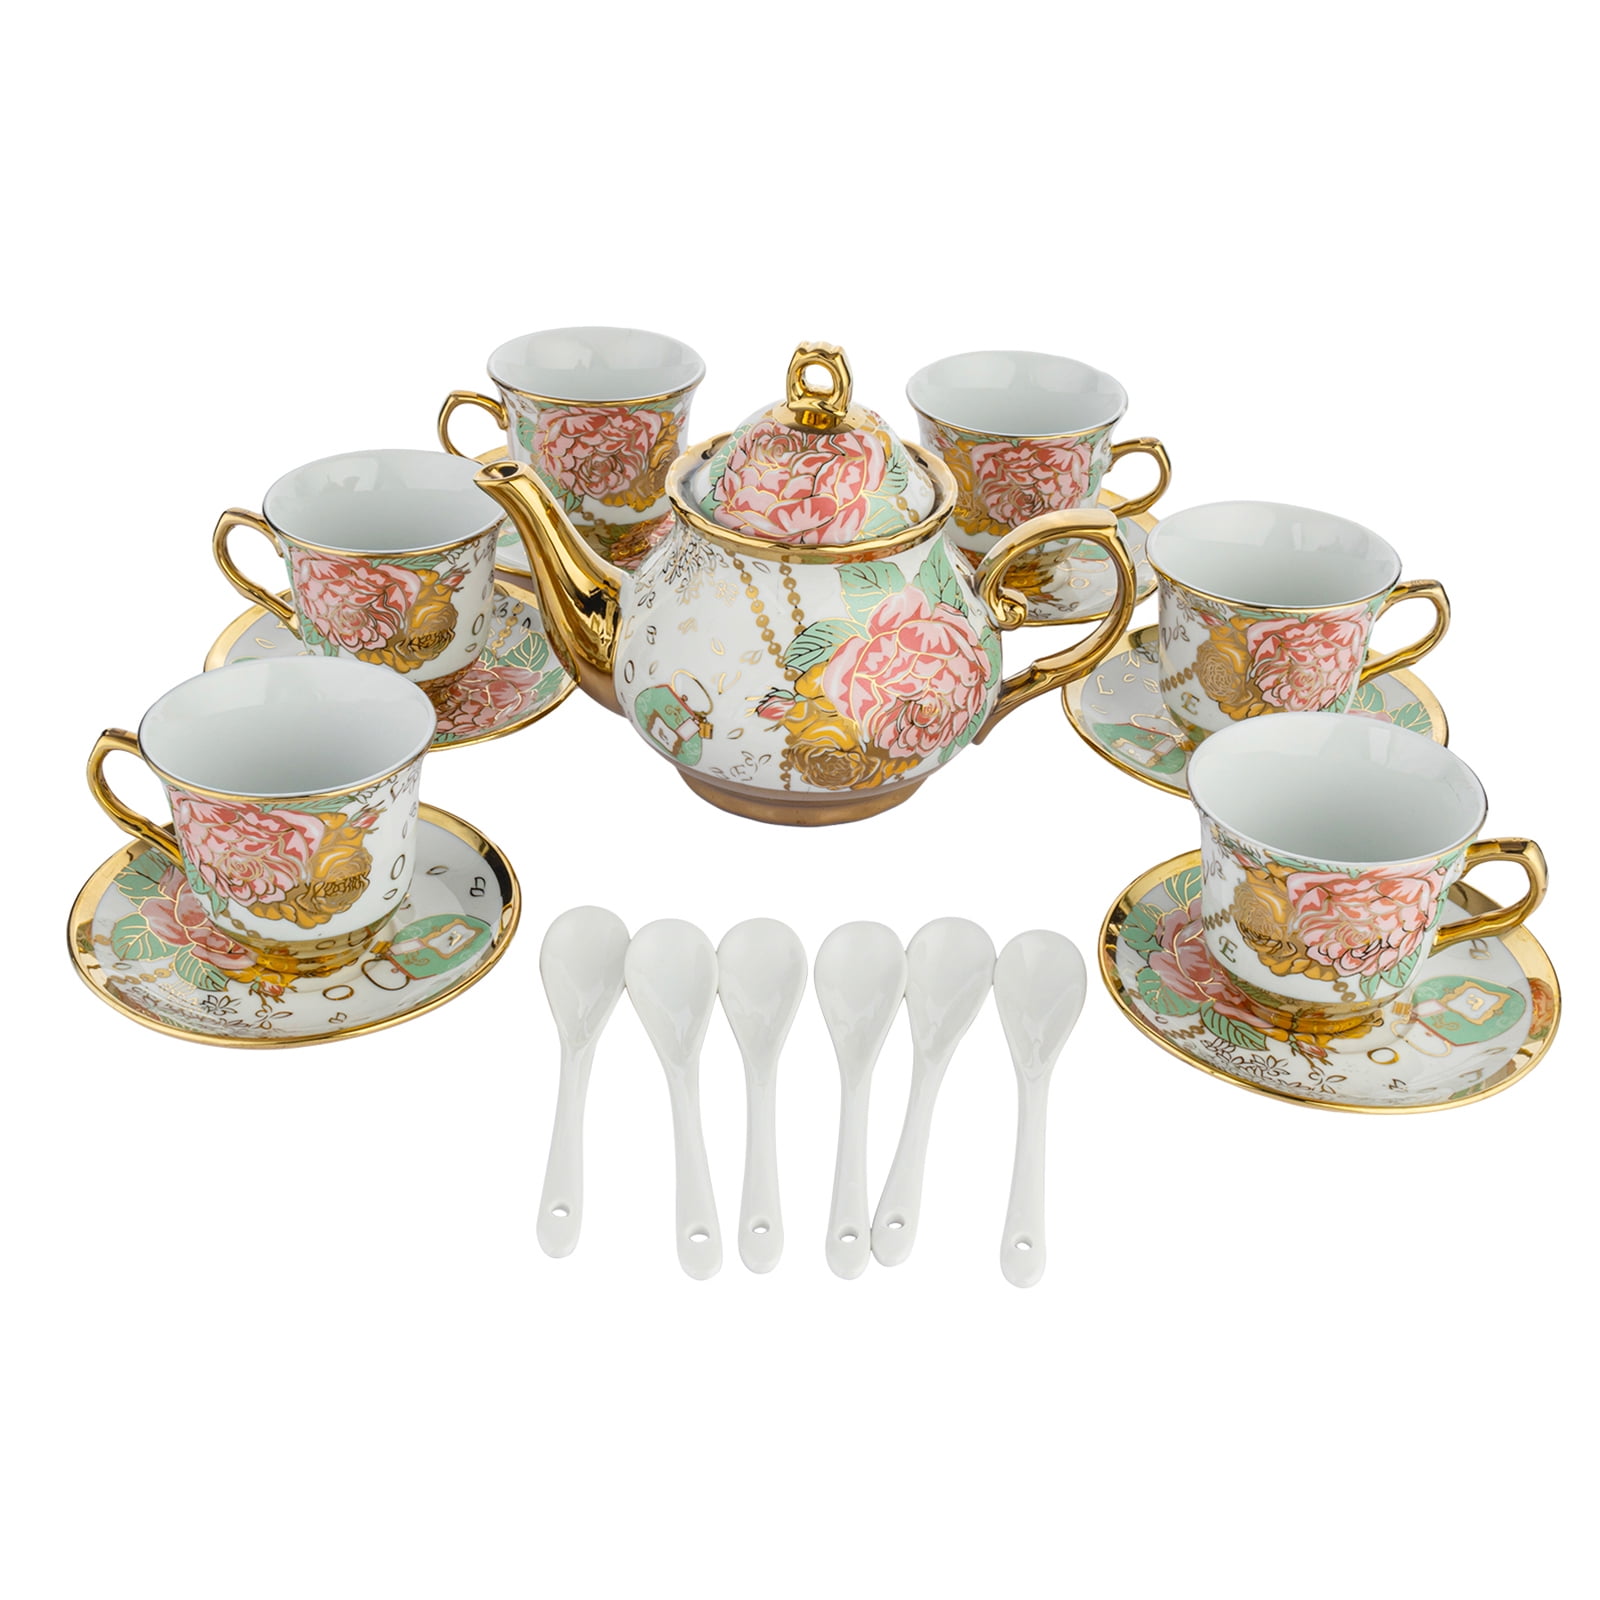 DaGiBayCn 20 Piece European Ceramic Tea Set Coffee set  Porcelain Tea SetWith Metal Holder,flower tea set Red Rose  Painting,160ML/Cup,460ML/Pot (Large version).: Tea Sets